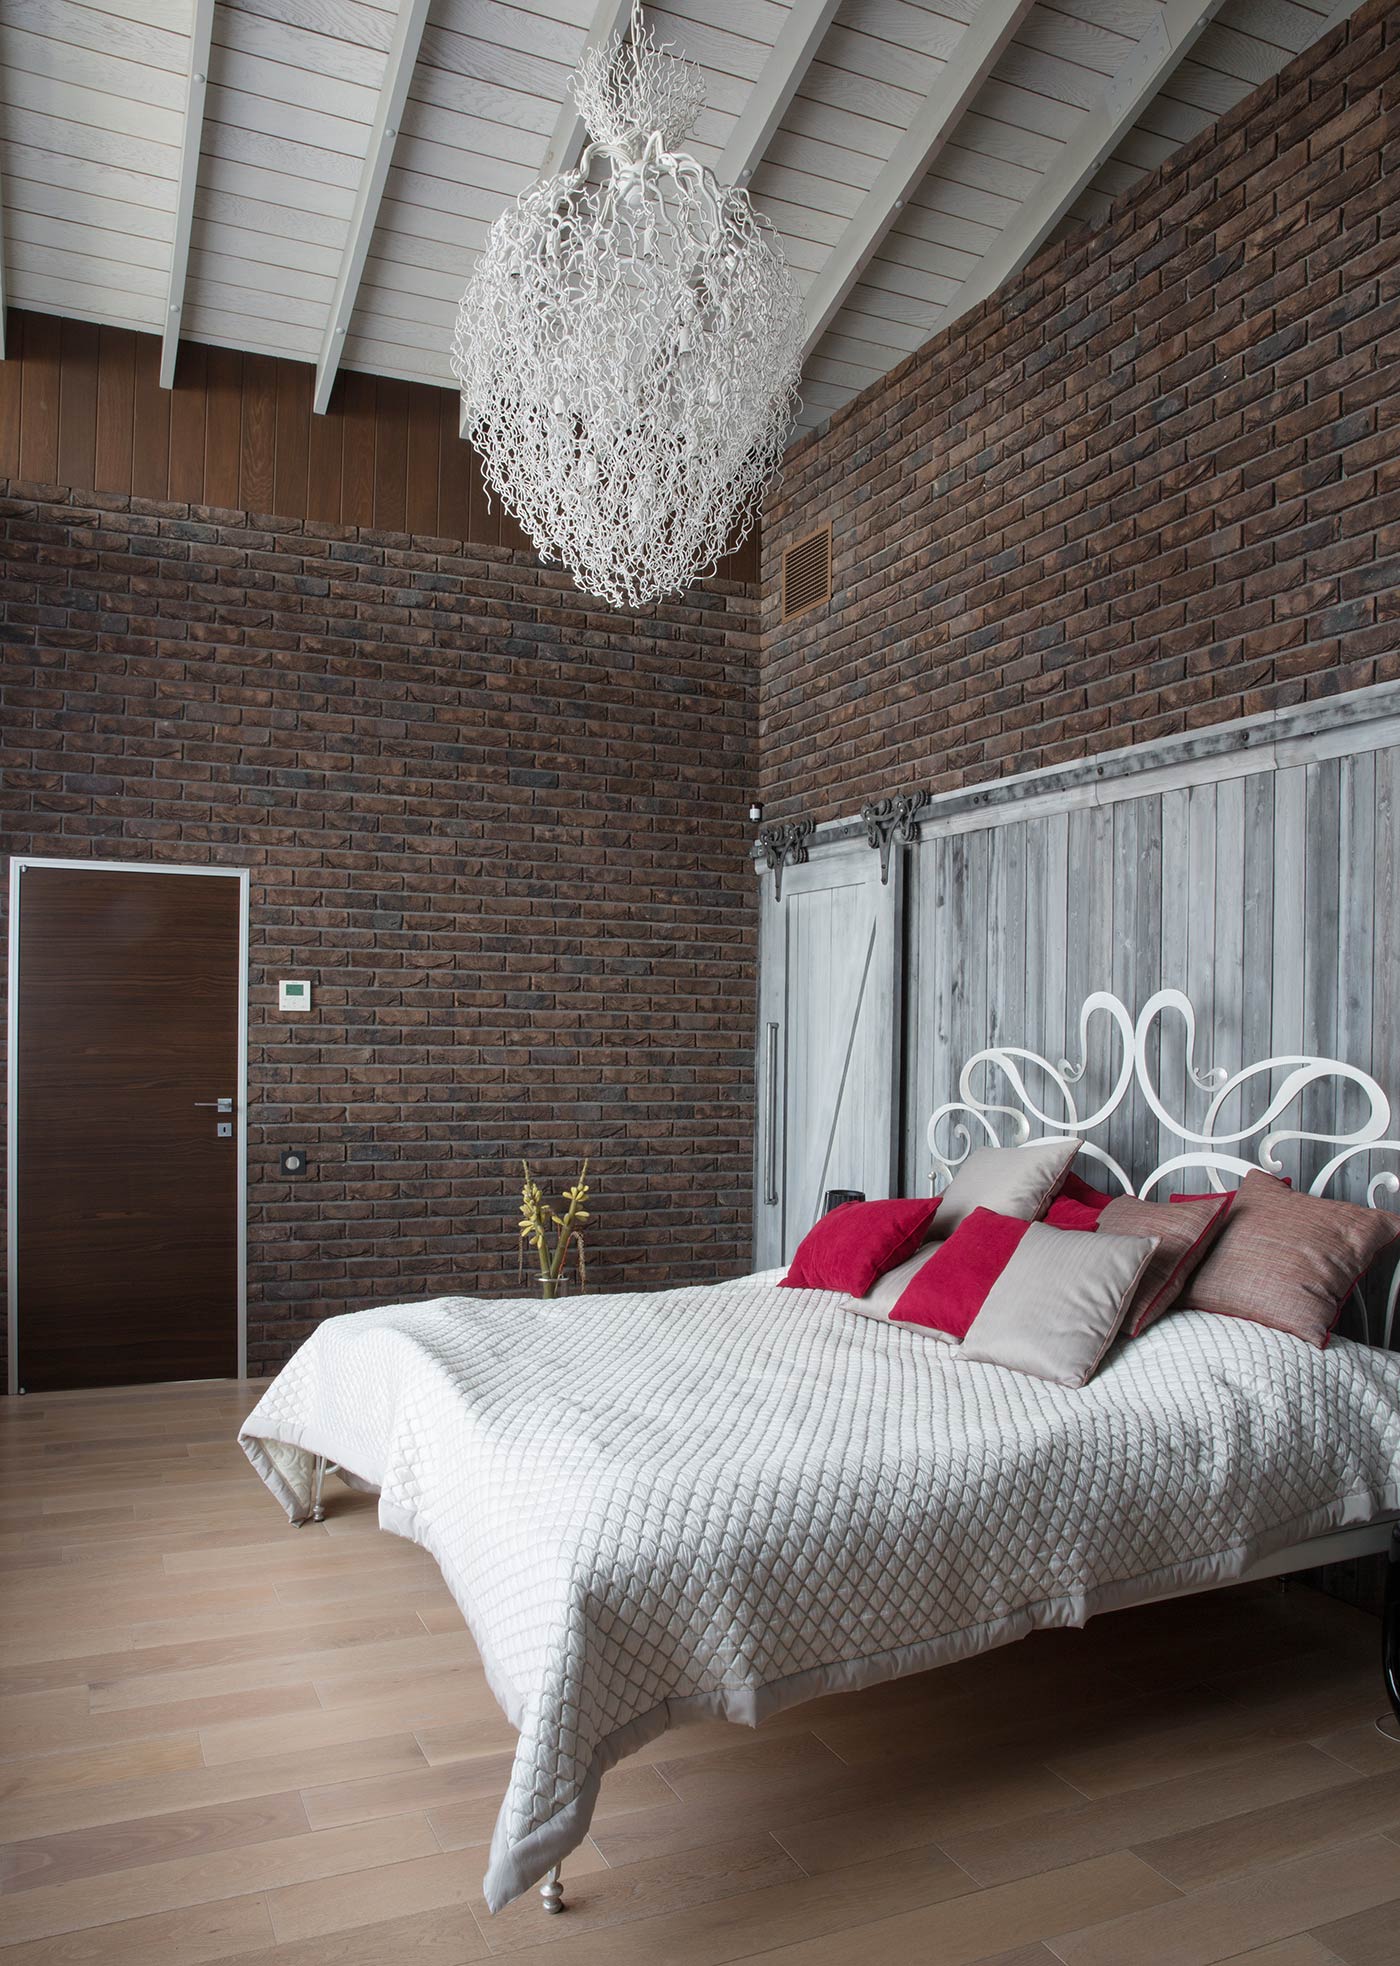 Bedroom With Brick Walls